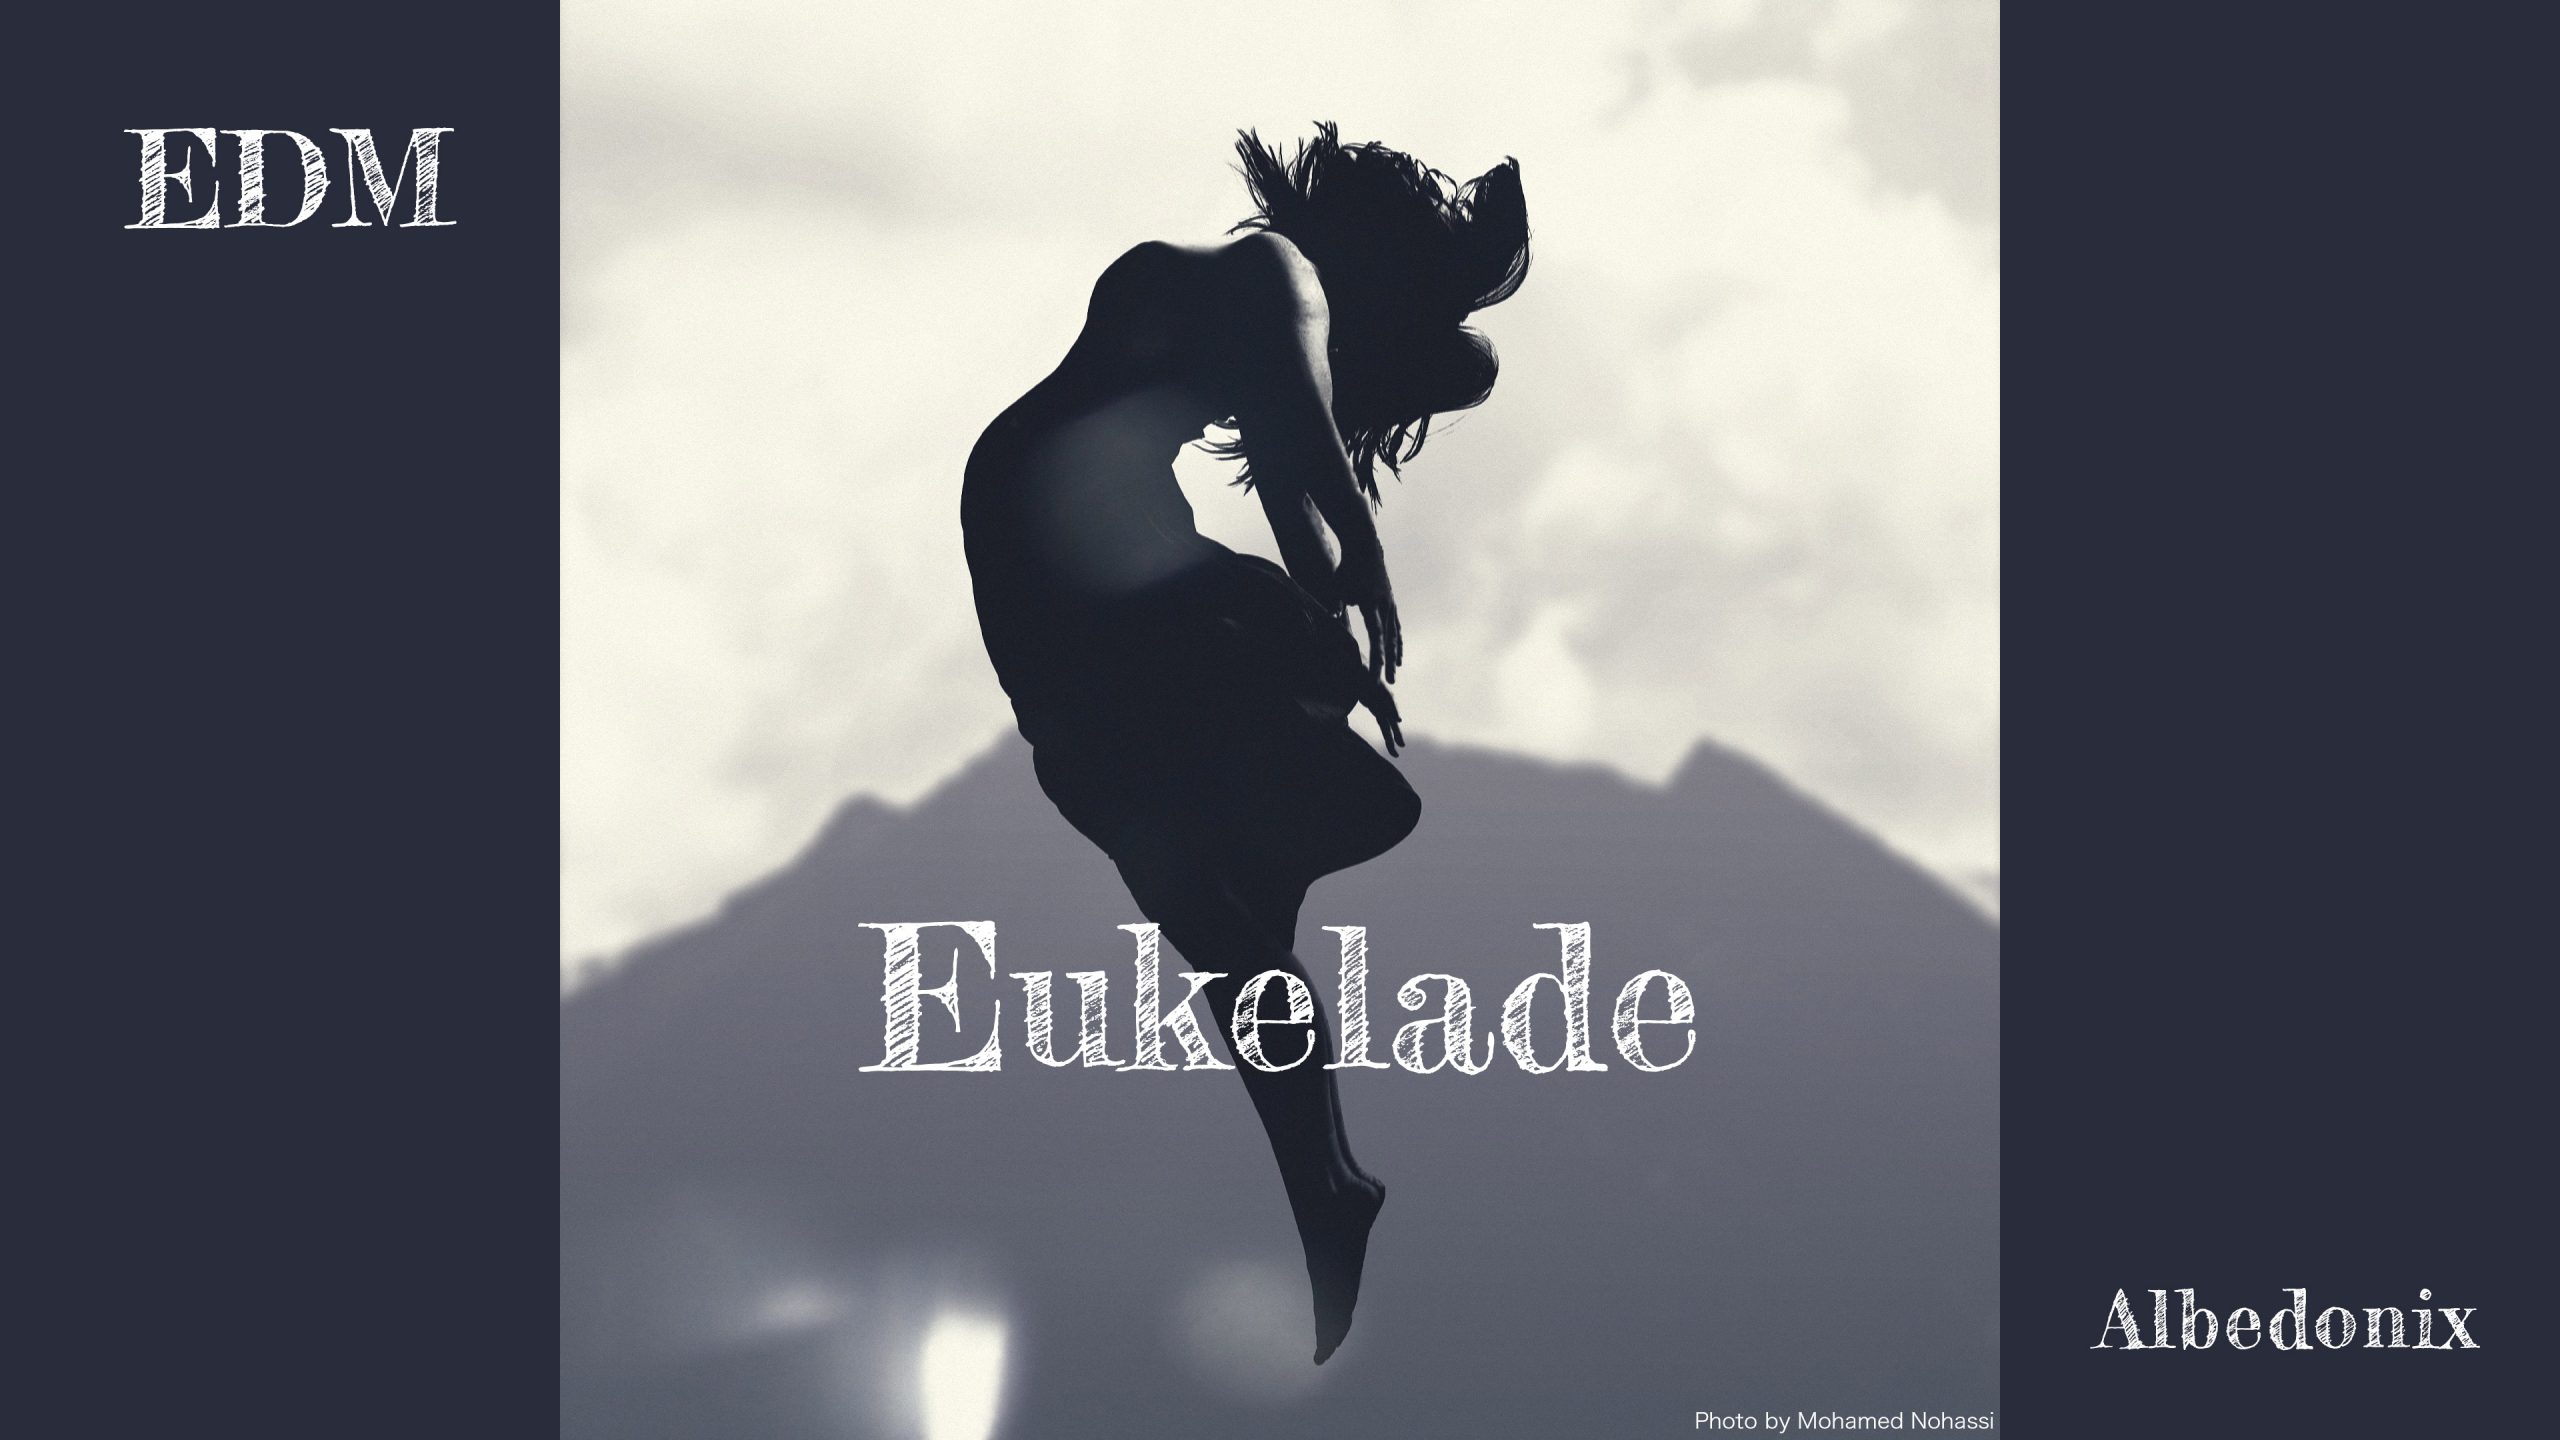 Eukelade (#EDM #テクノ #クラブミュージック) @Albedonix #アルベドニクス #Youtube #Music #Club #Dance #Electronic #JAPAN #TOKYO #Park #Techno #Trans #Party #ElectronicMusic #TechnoMusic #DanceMusic